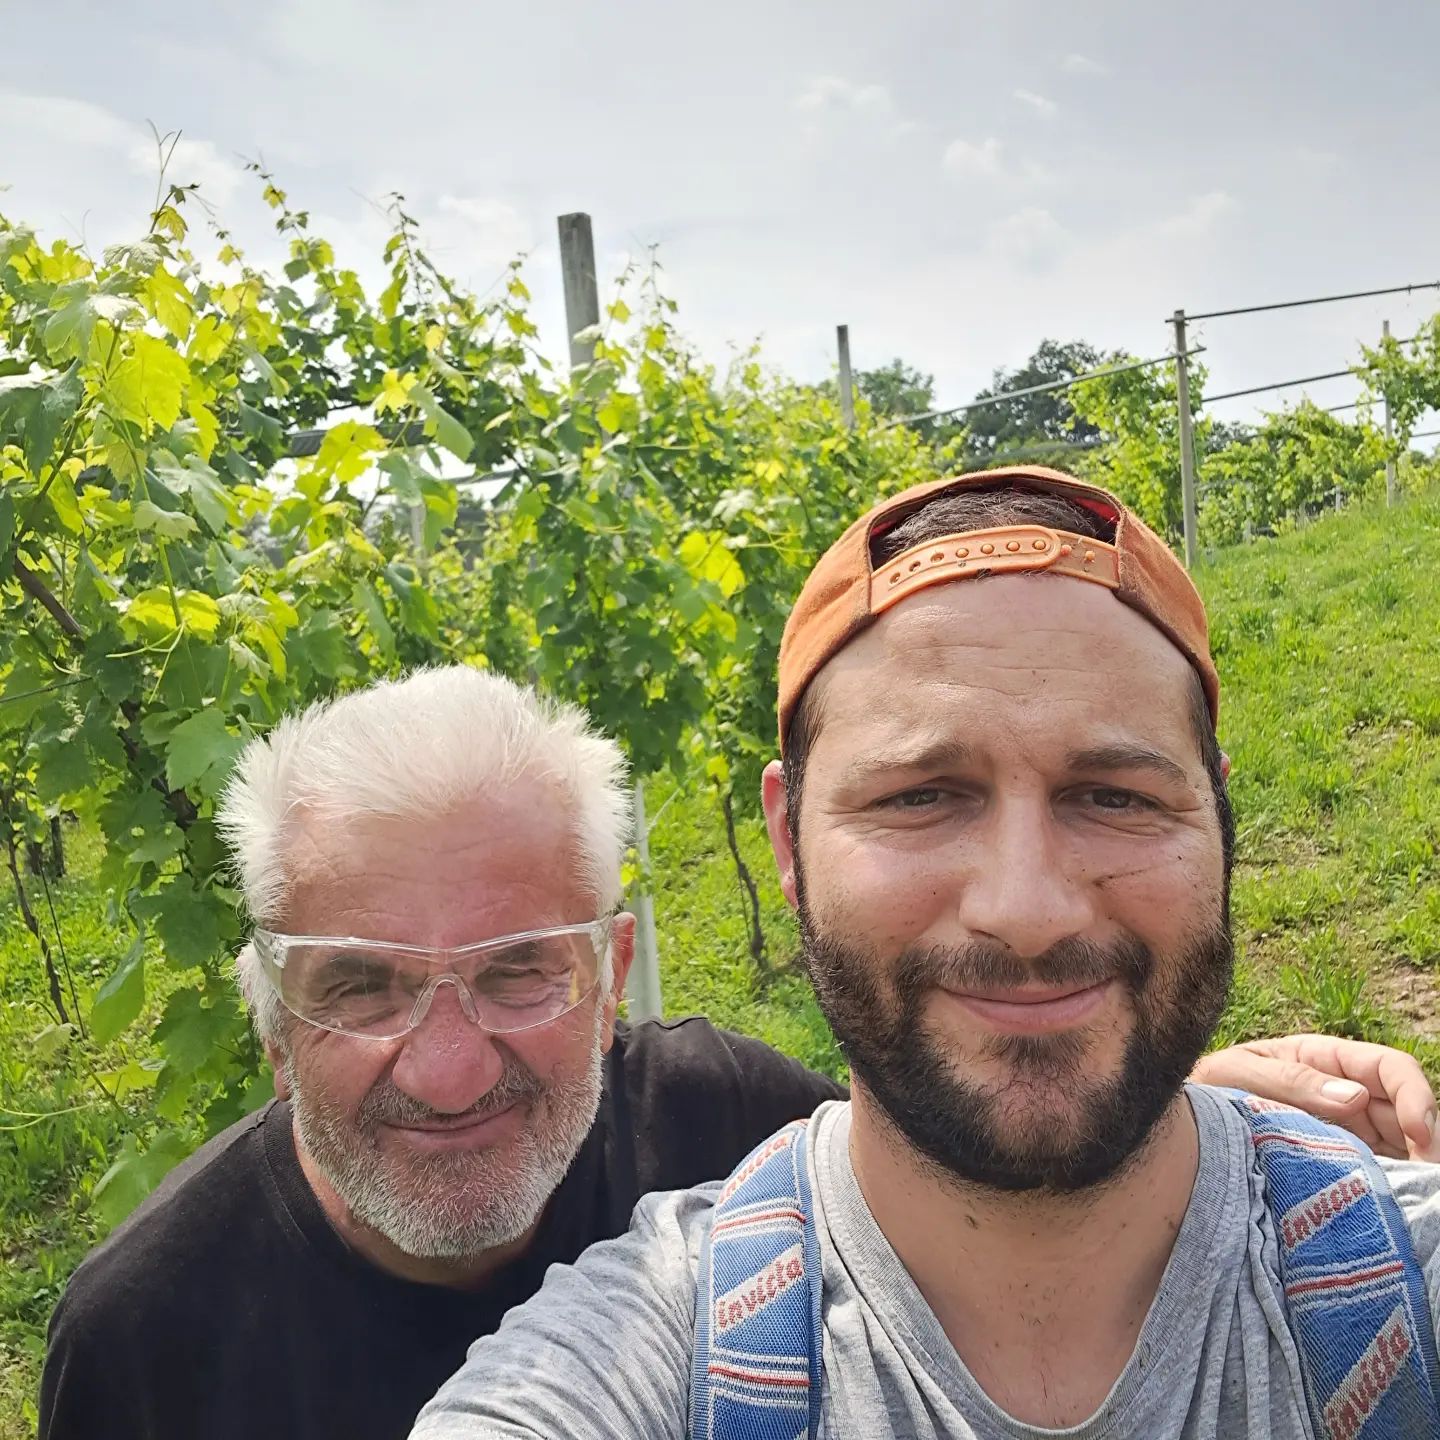 Quando passa il boss a controllare 

#winefotography #wineblogger #wine #winelover #erbalucedicaluso #erbaluce #canavese #piedmont #piemonte #moncrivello #italy🇮🇹 #piemont #italie #italien #ピエモンテ #イタリア #vercellese #vercelli #italy #italia #moncravel